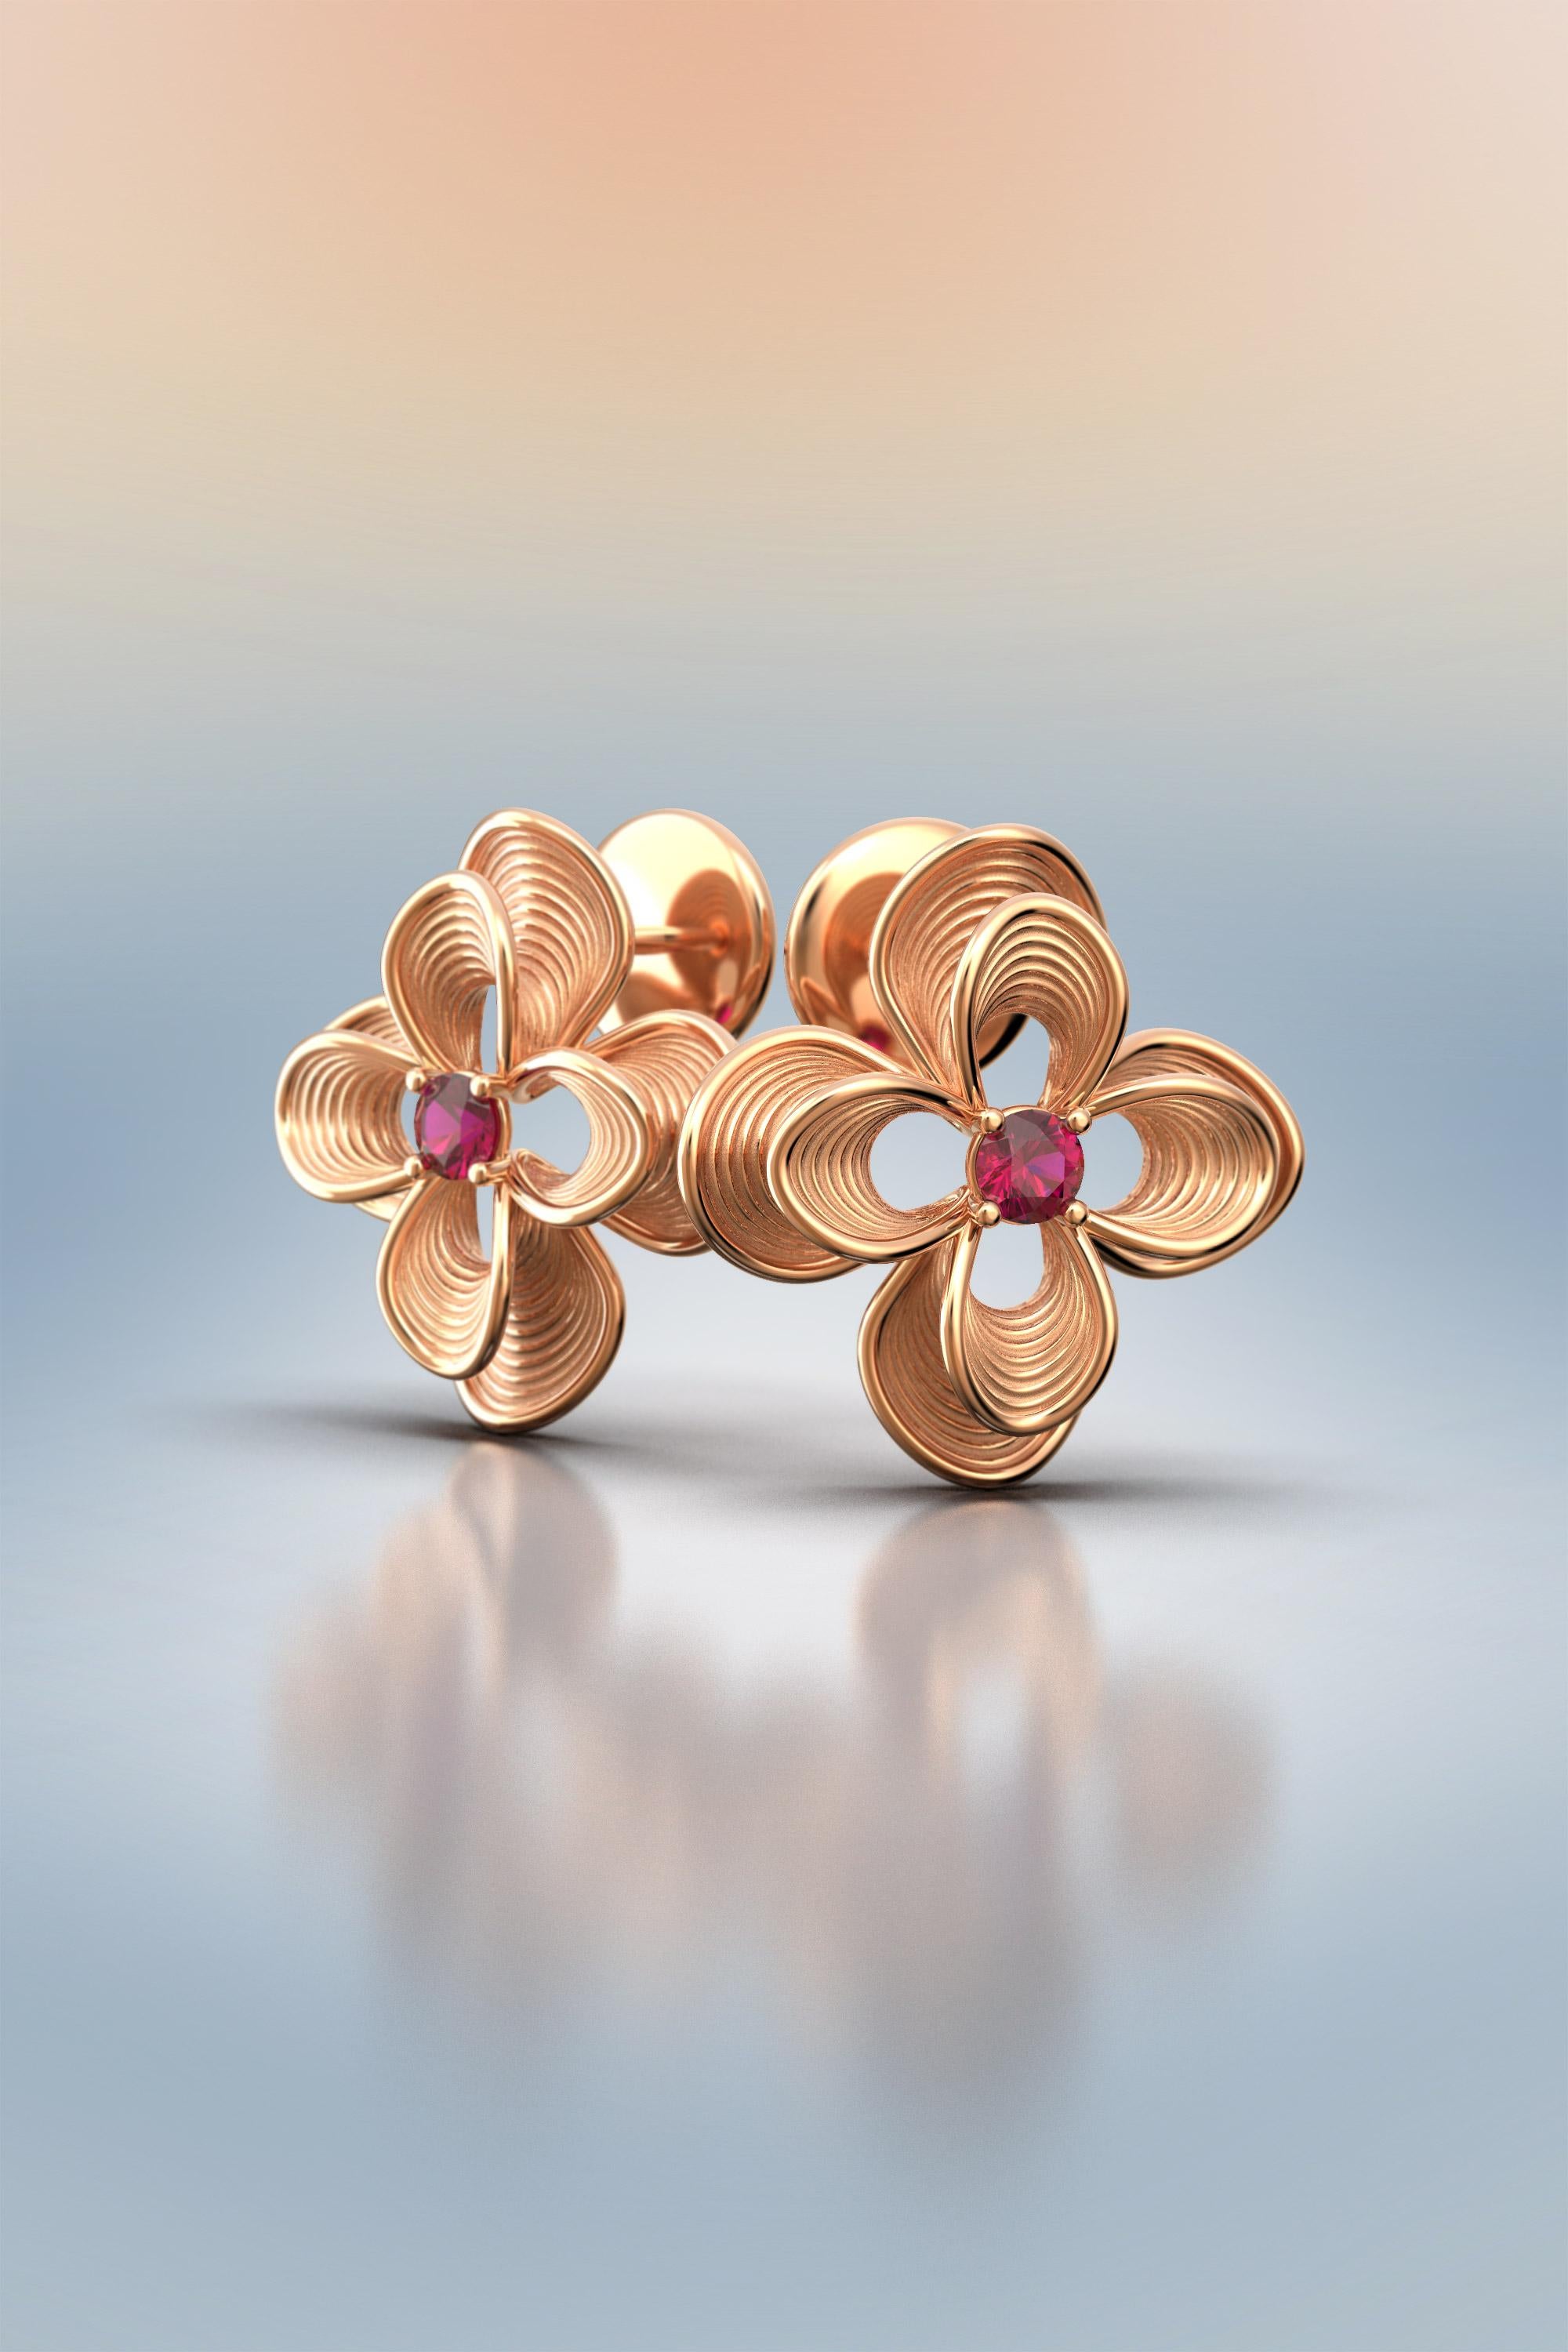 Italian Ruby Stud Earrings in 14k Gold by Oltremare Gioielli For Sale 1